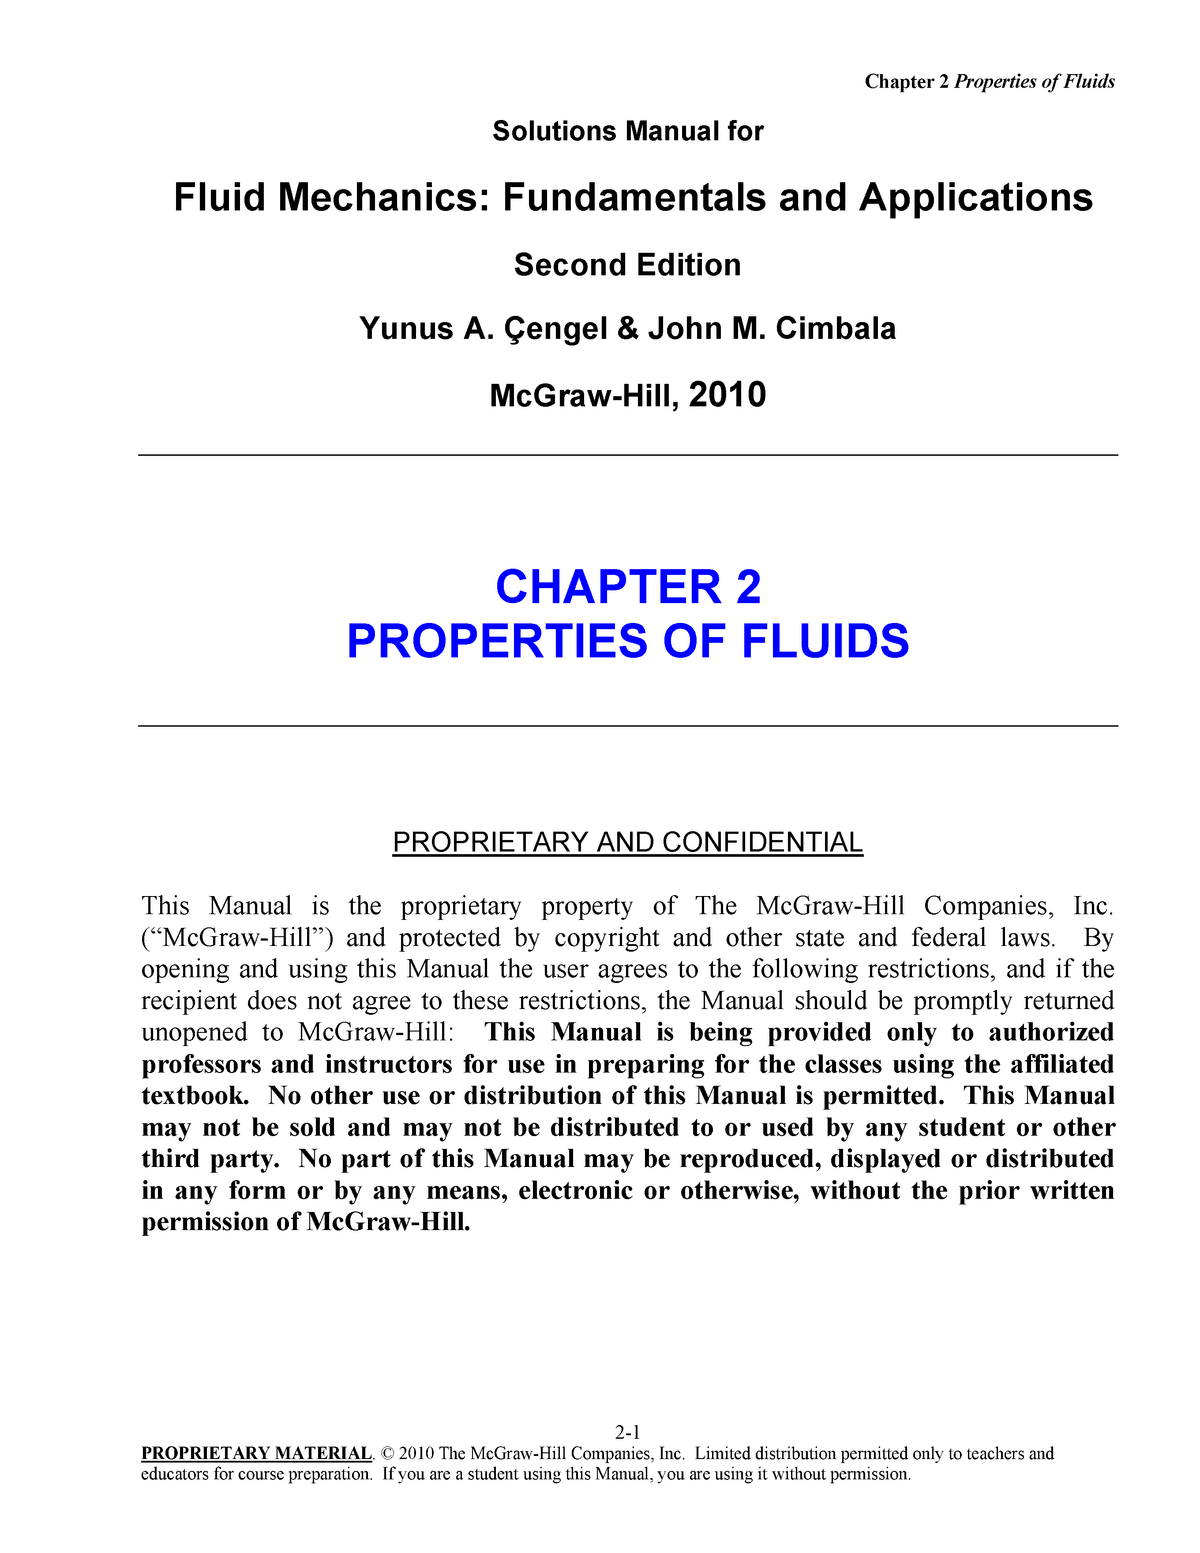 Fluidmechanics2ndeditioncengelsolutionmanual ( PDFDrive ) StuDocu